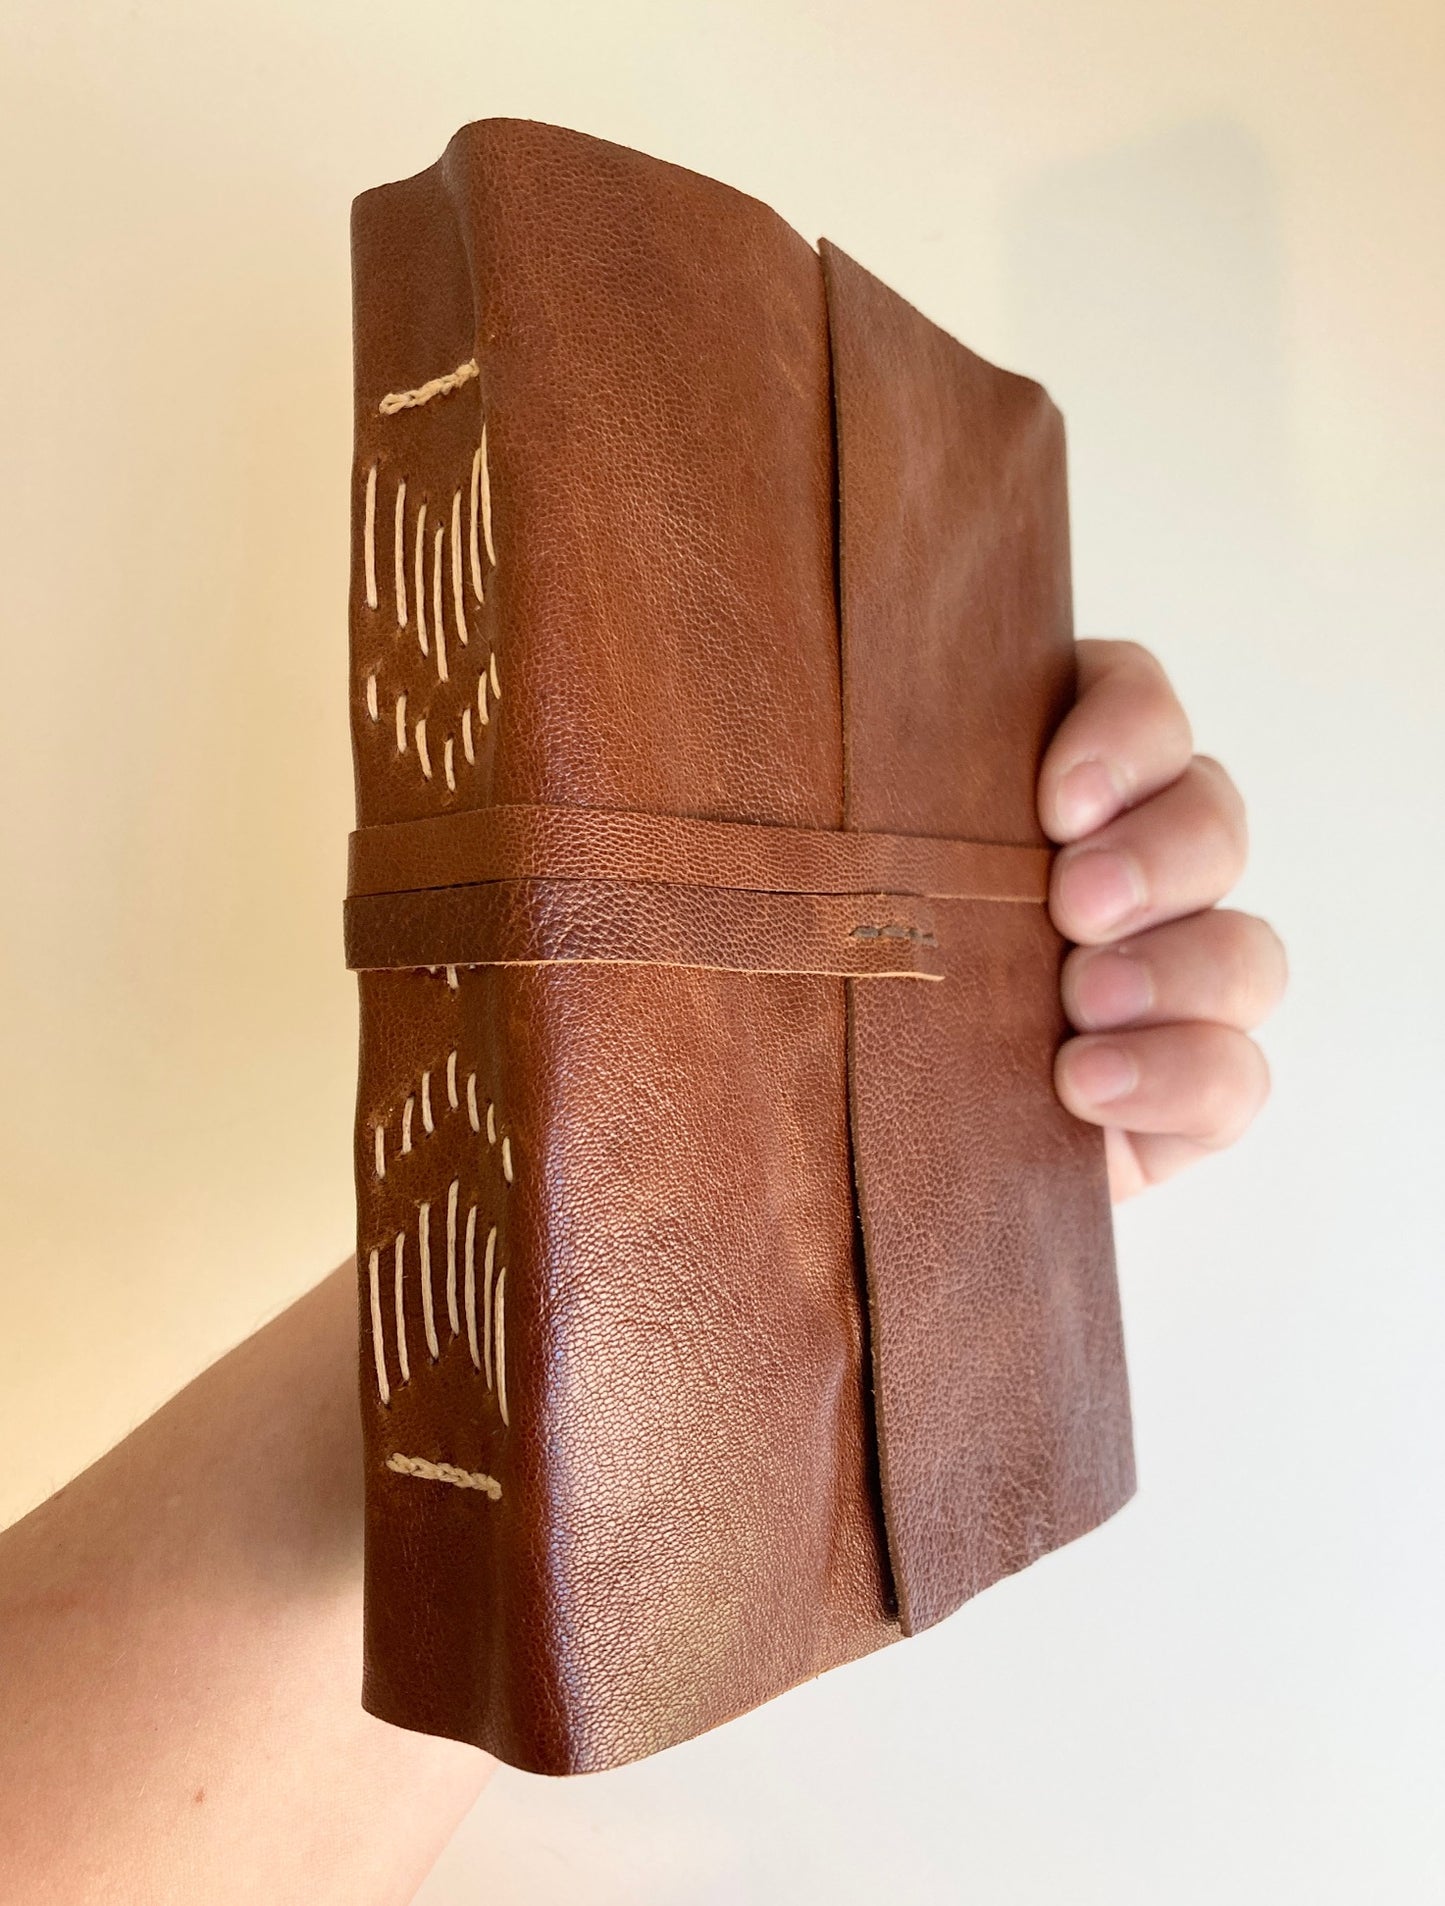 Auburn Brown Leather Journal - Diamond Binding Style Thrive Handmade Scrap Leather Journals Handmade in Philadelphia